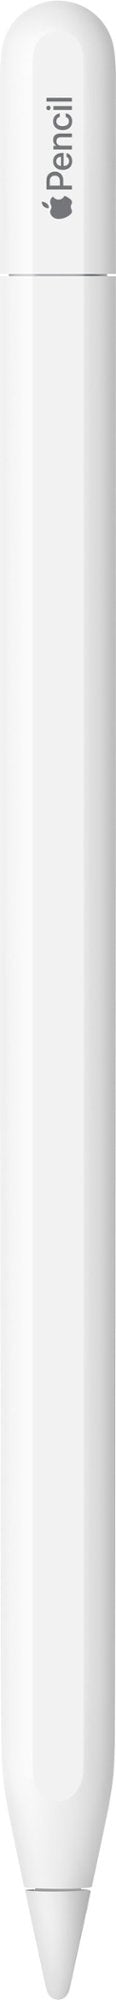 Apple Pencil (USB-C) - White (Certified Refurbished)